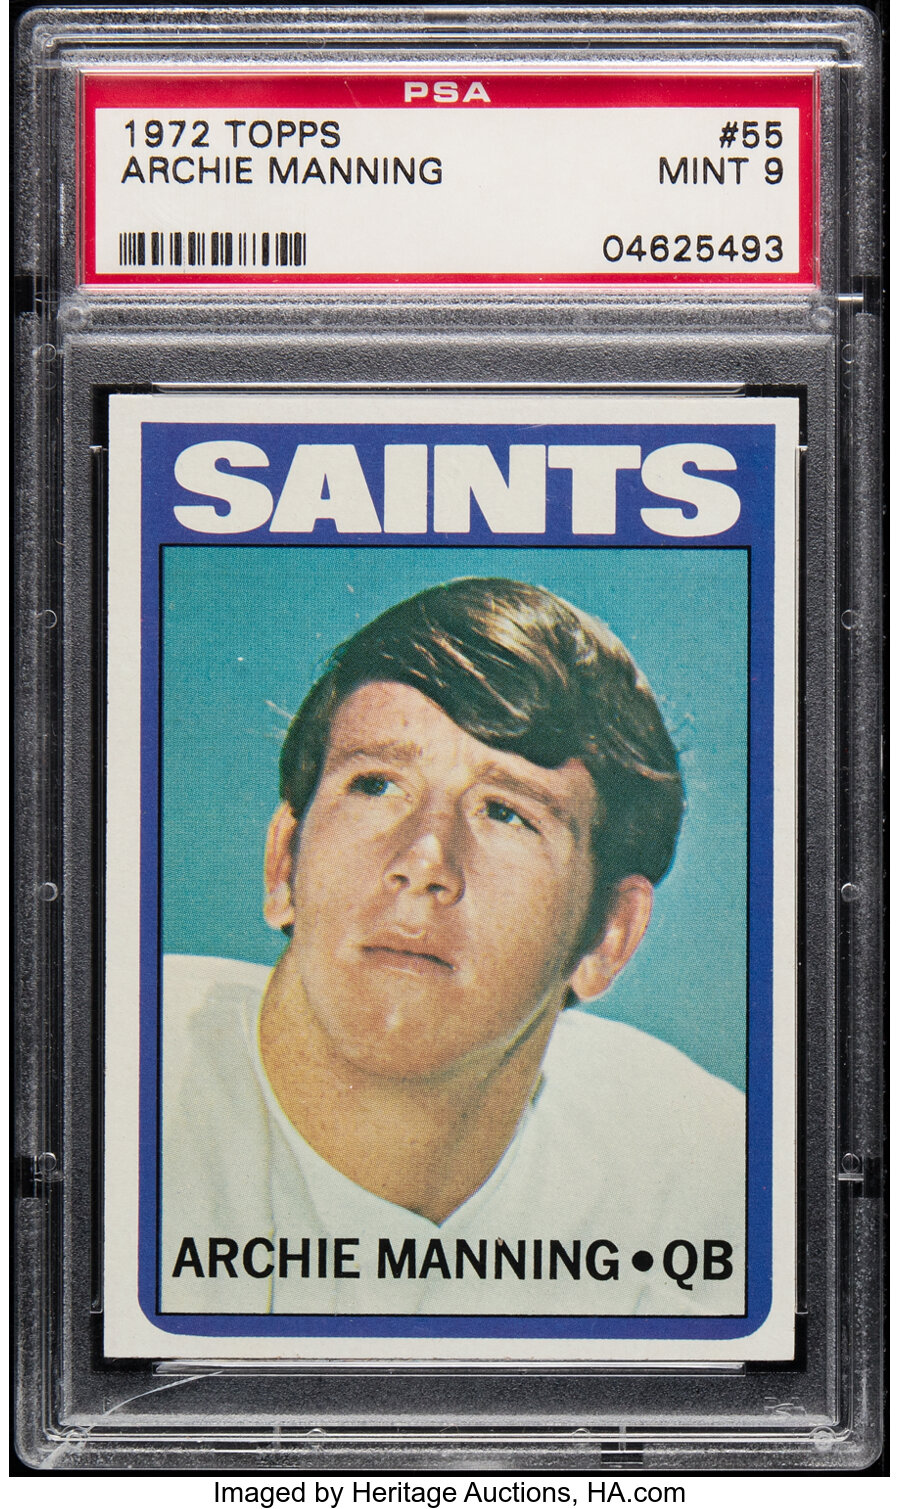 1972 Topps Archie Manning #55 PSA Mint 9